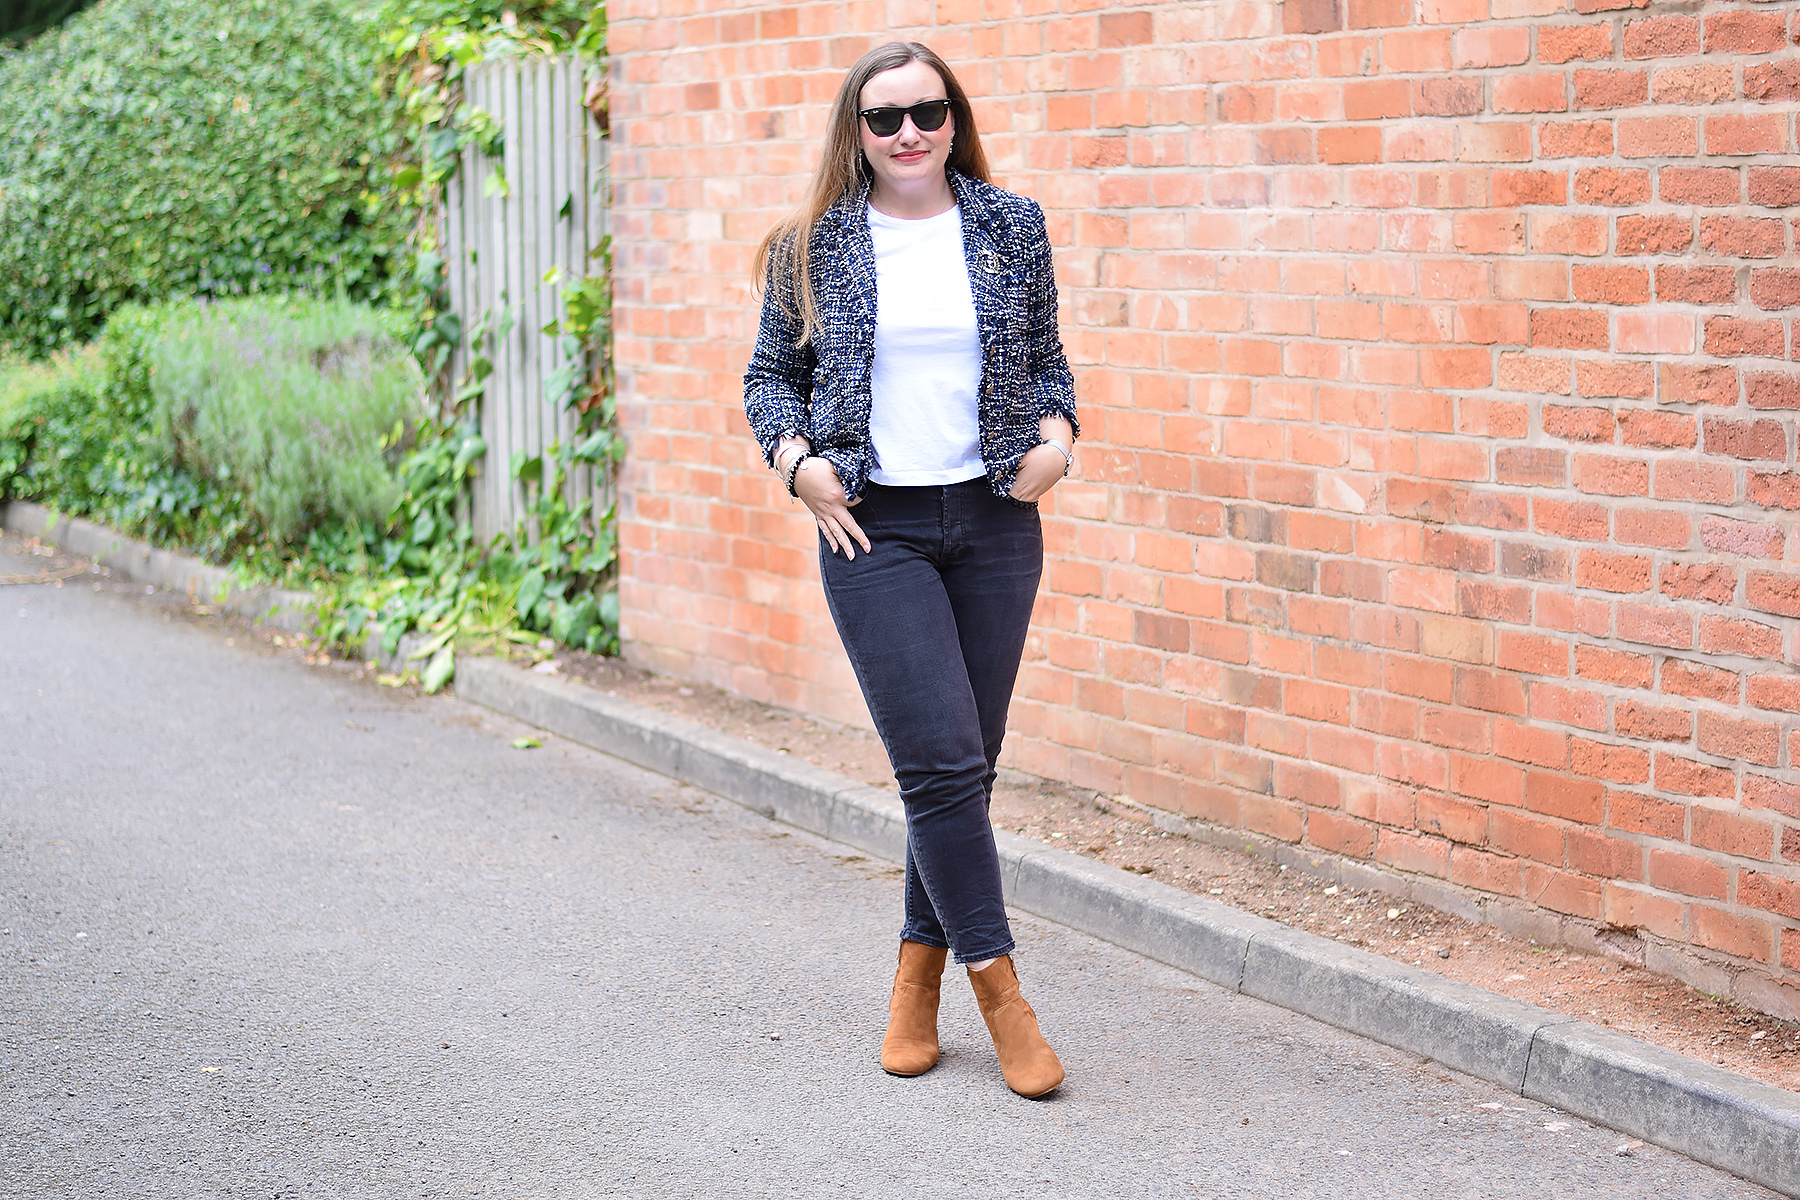 Gemma From Jacquard Flower UK Fashion Blog wearing Zara Tweed Jacket and Chanel brooch